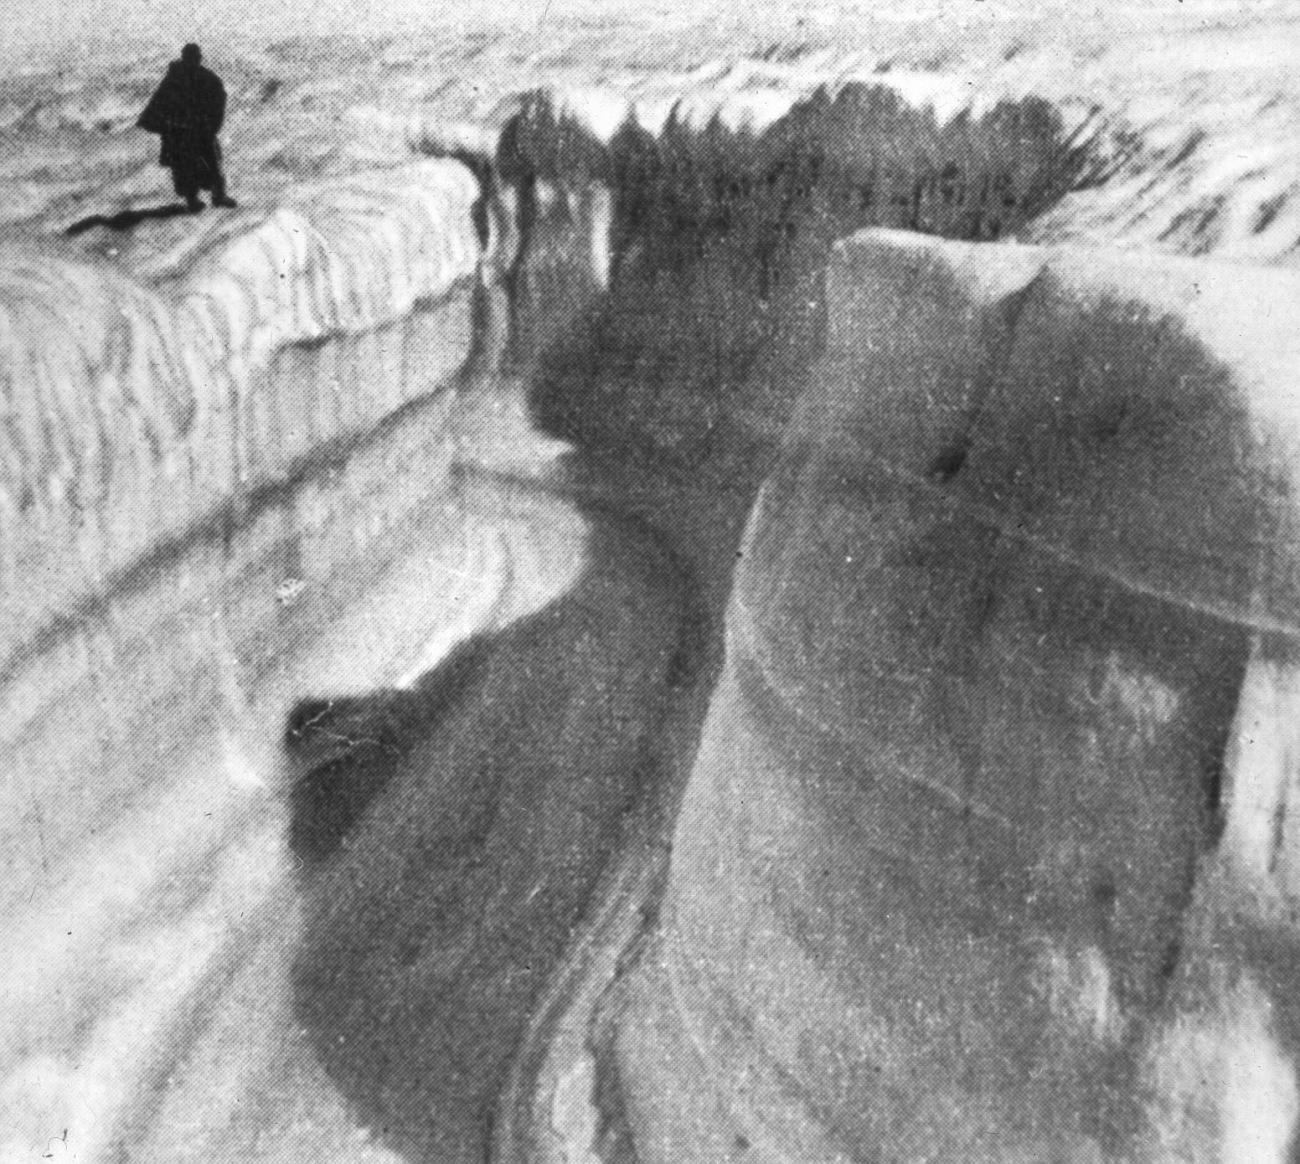 BD/66/280 - 
Gletsjer Carstensz gebergte
